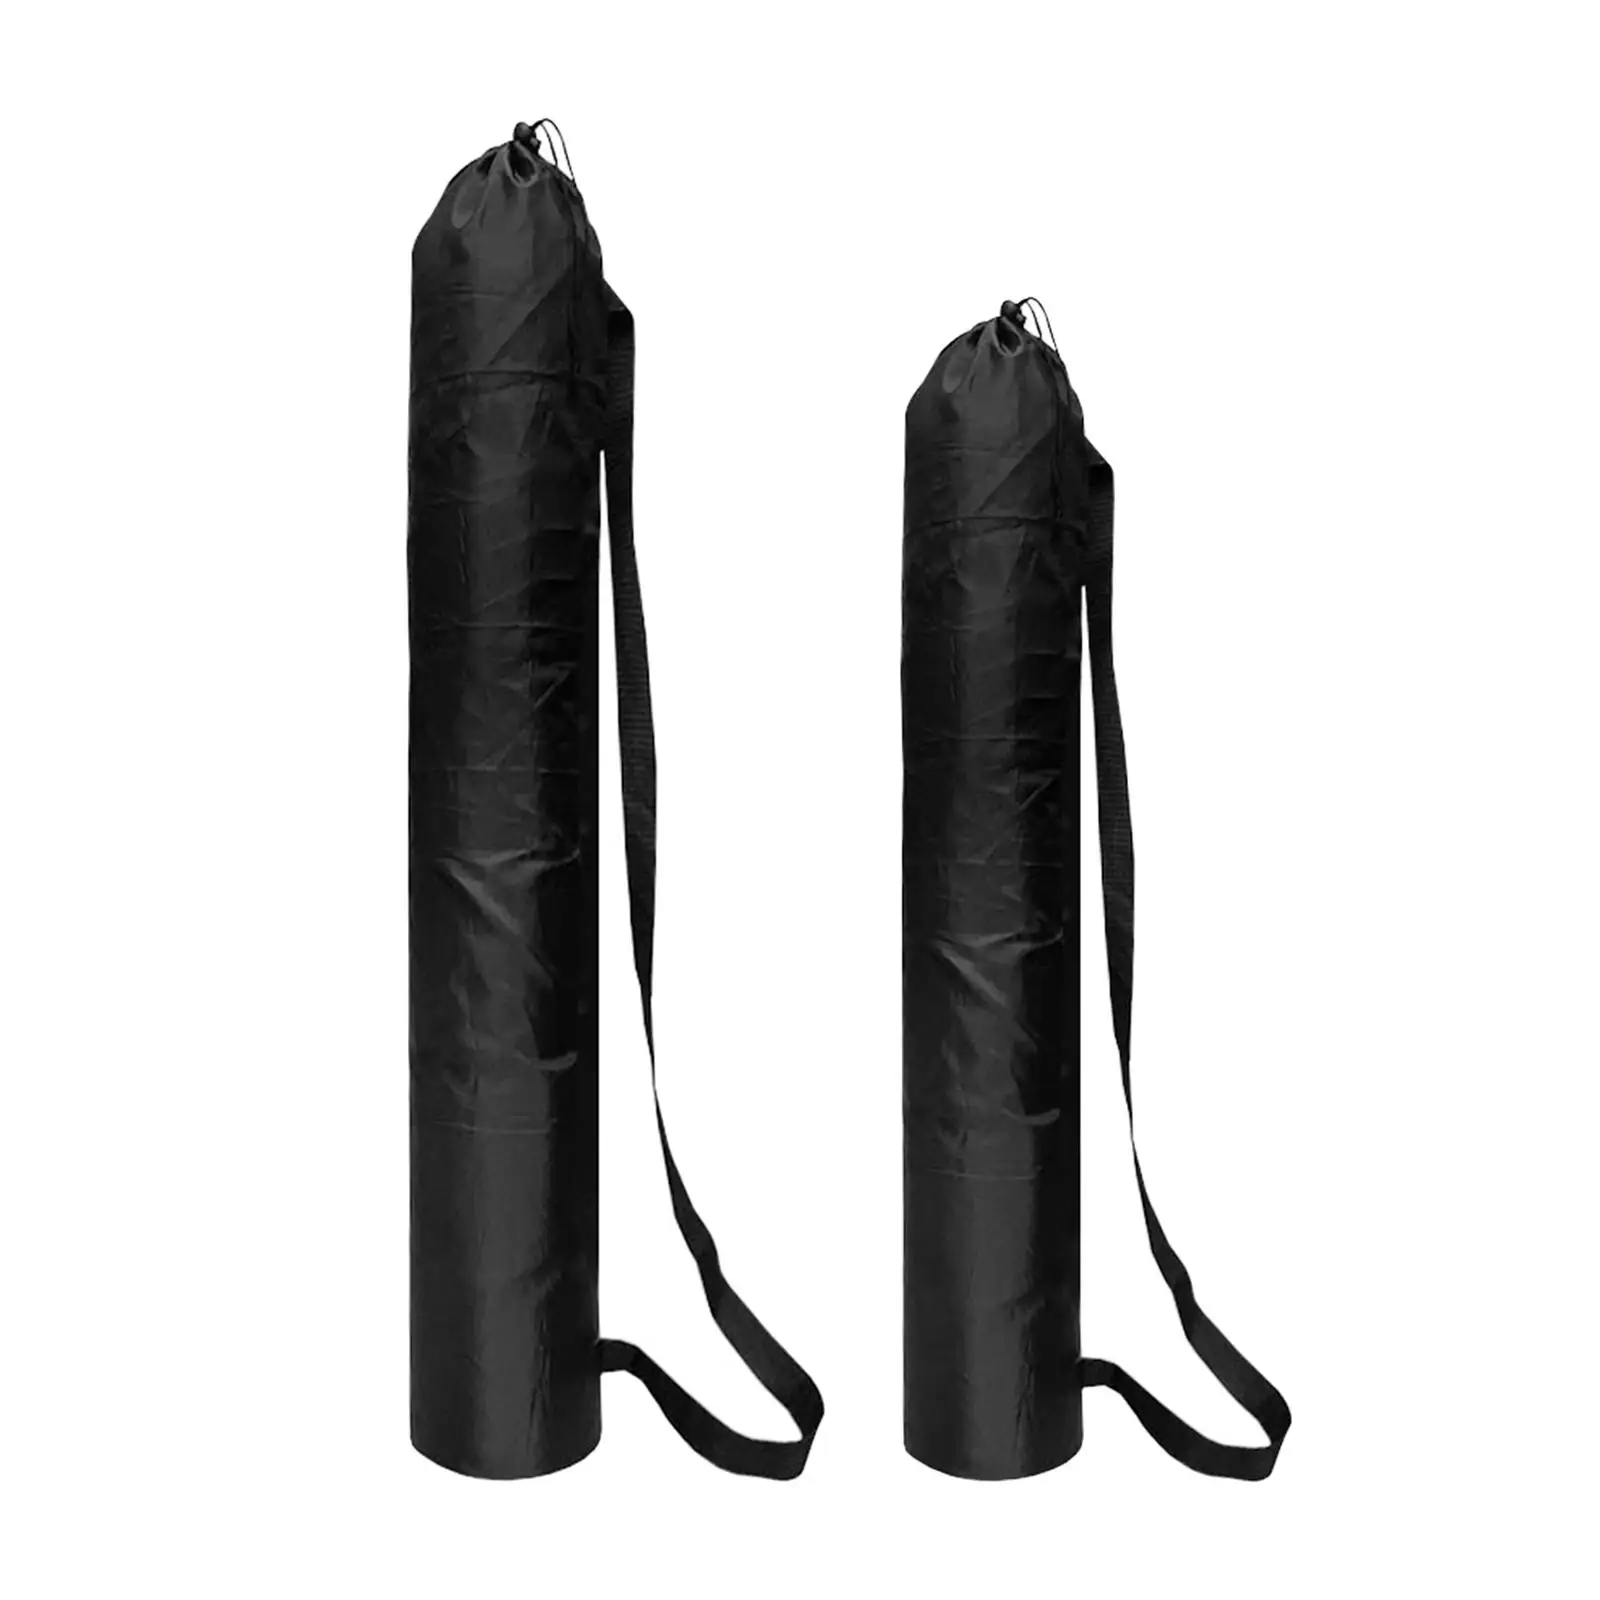 Yoga Mat Bag Gym Bag Water Resistant with Shoulder Strap Tripod Carrying Bag